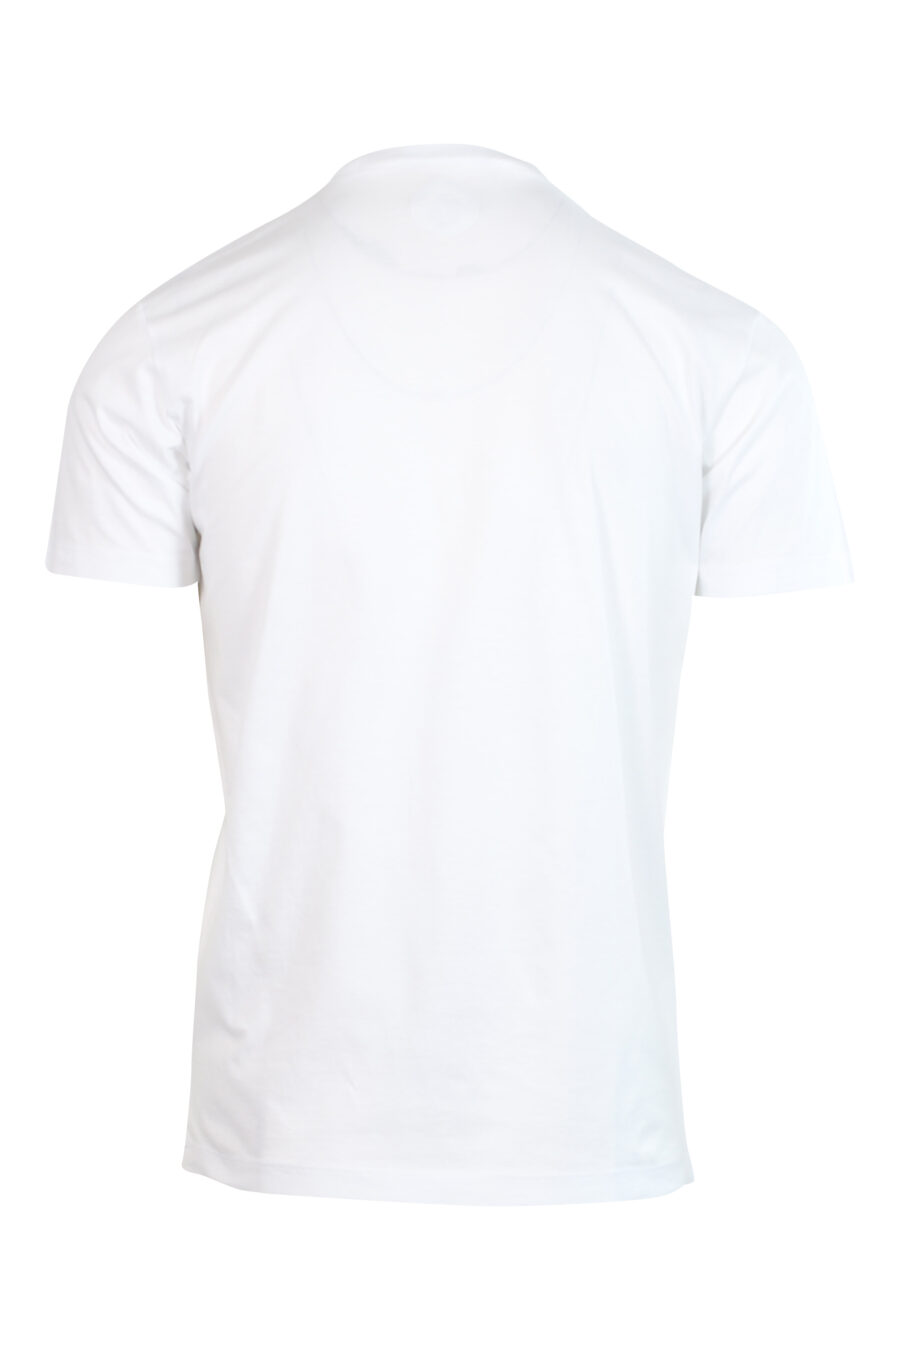 Camiseta blanca con logo rojo - 8052134945995 2